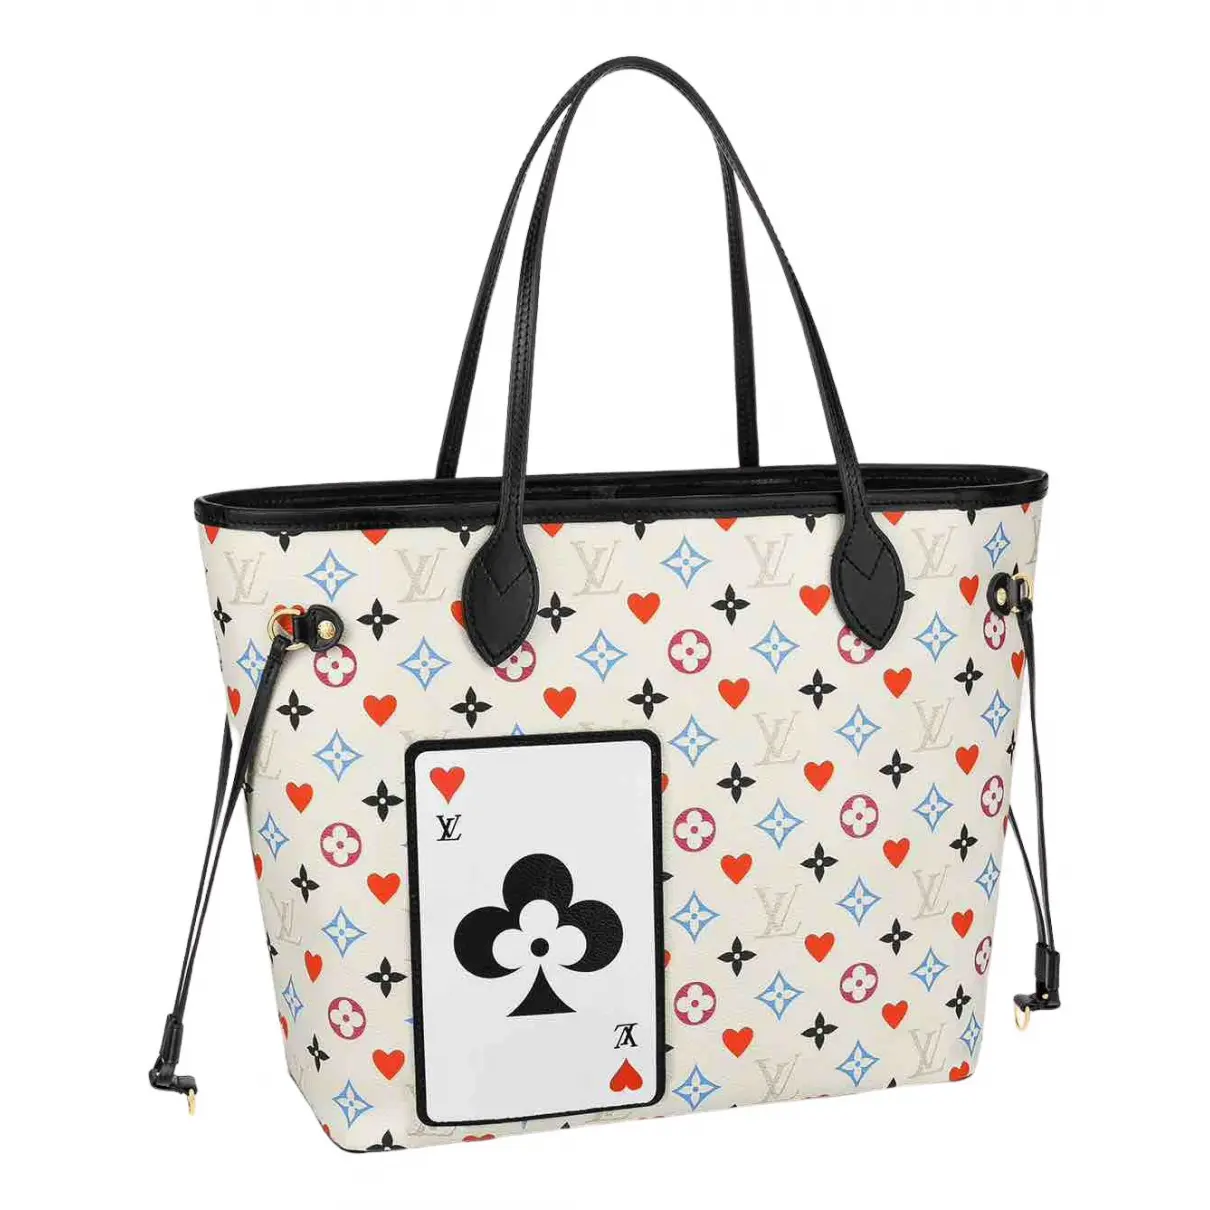 Buy Louis Vuitton Neverfull cloth handbag online